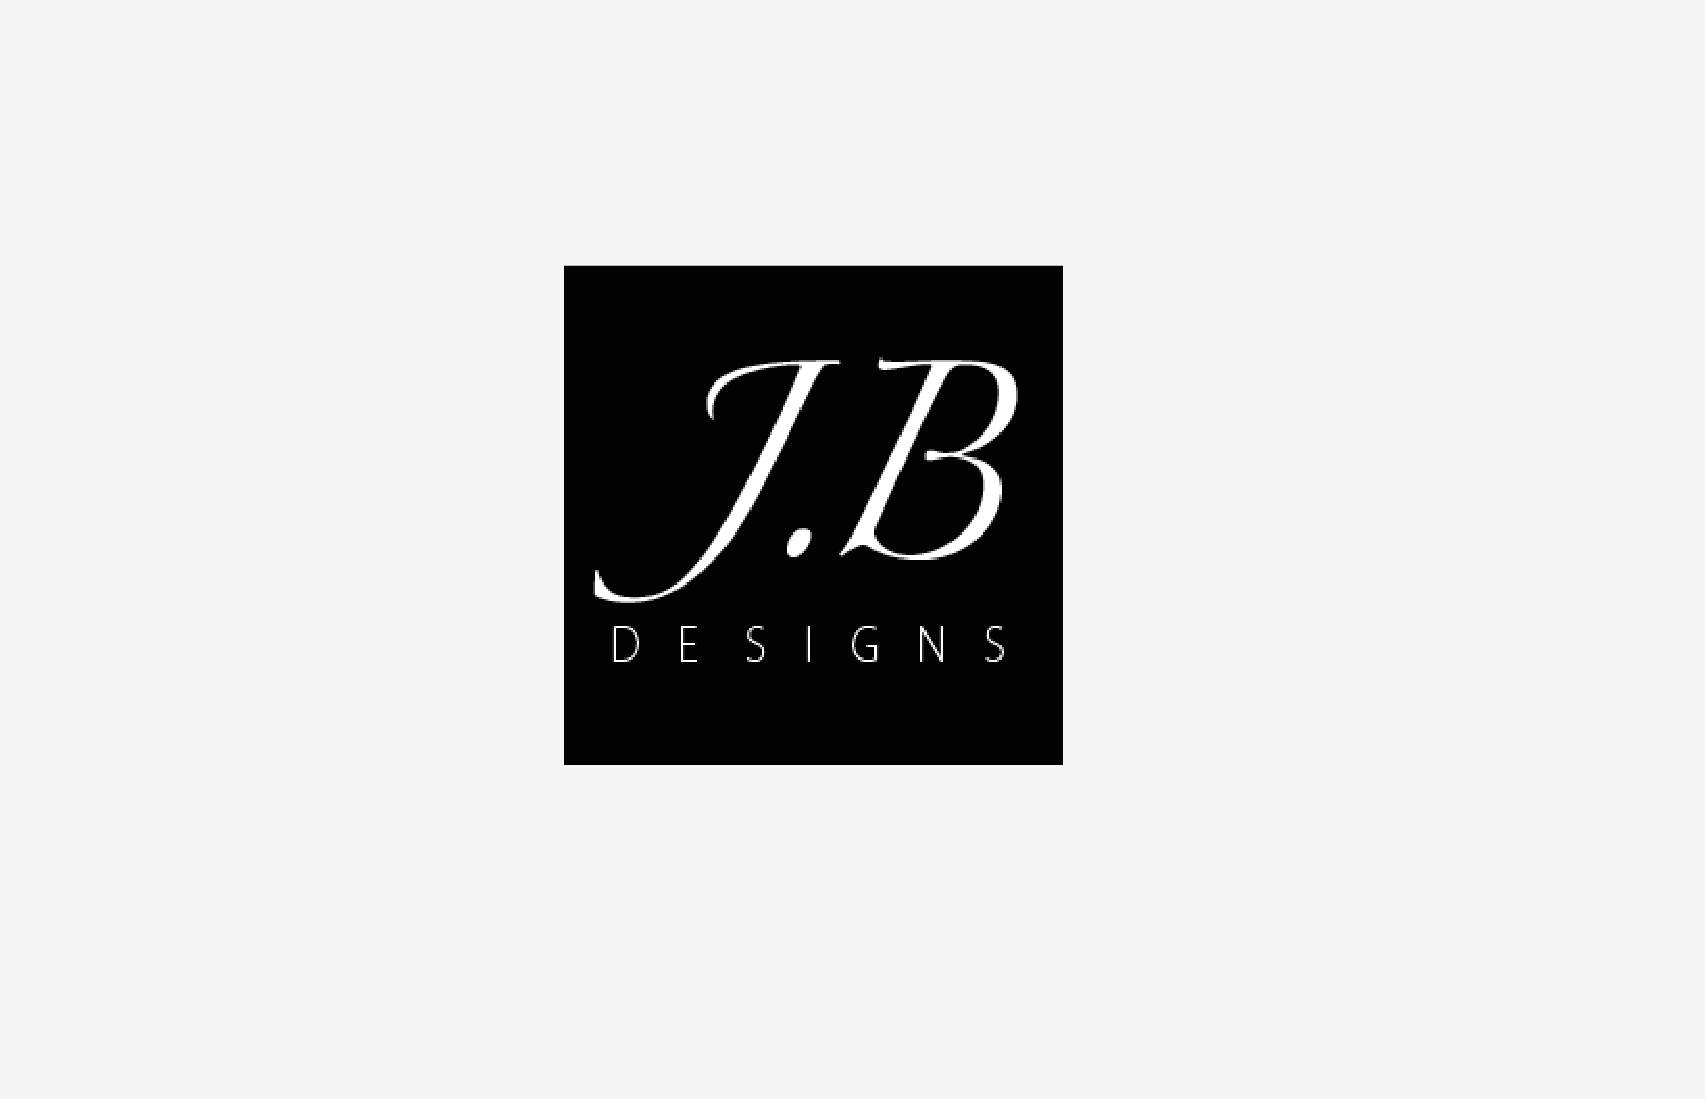 J.B Designs